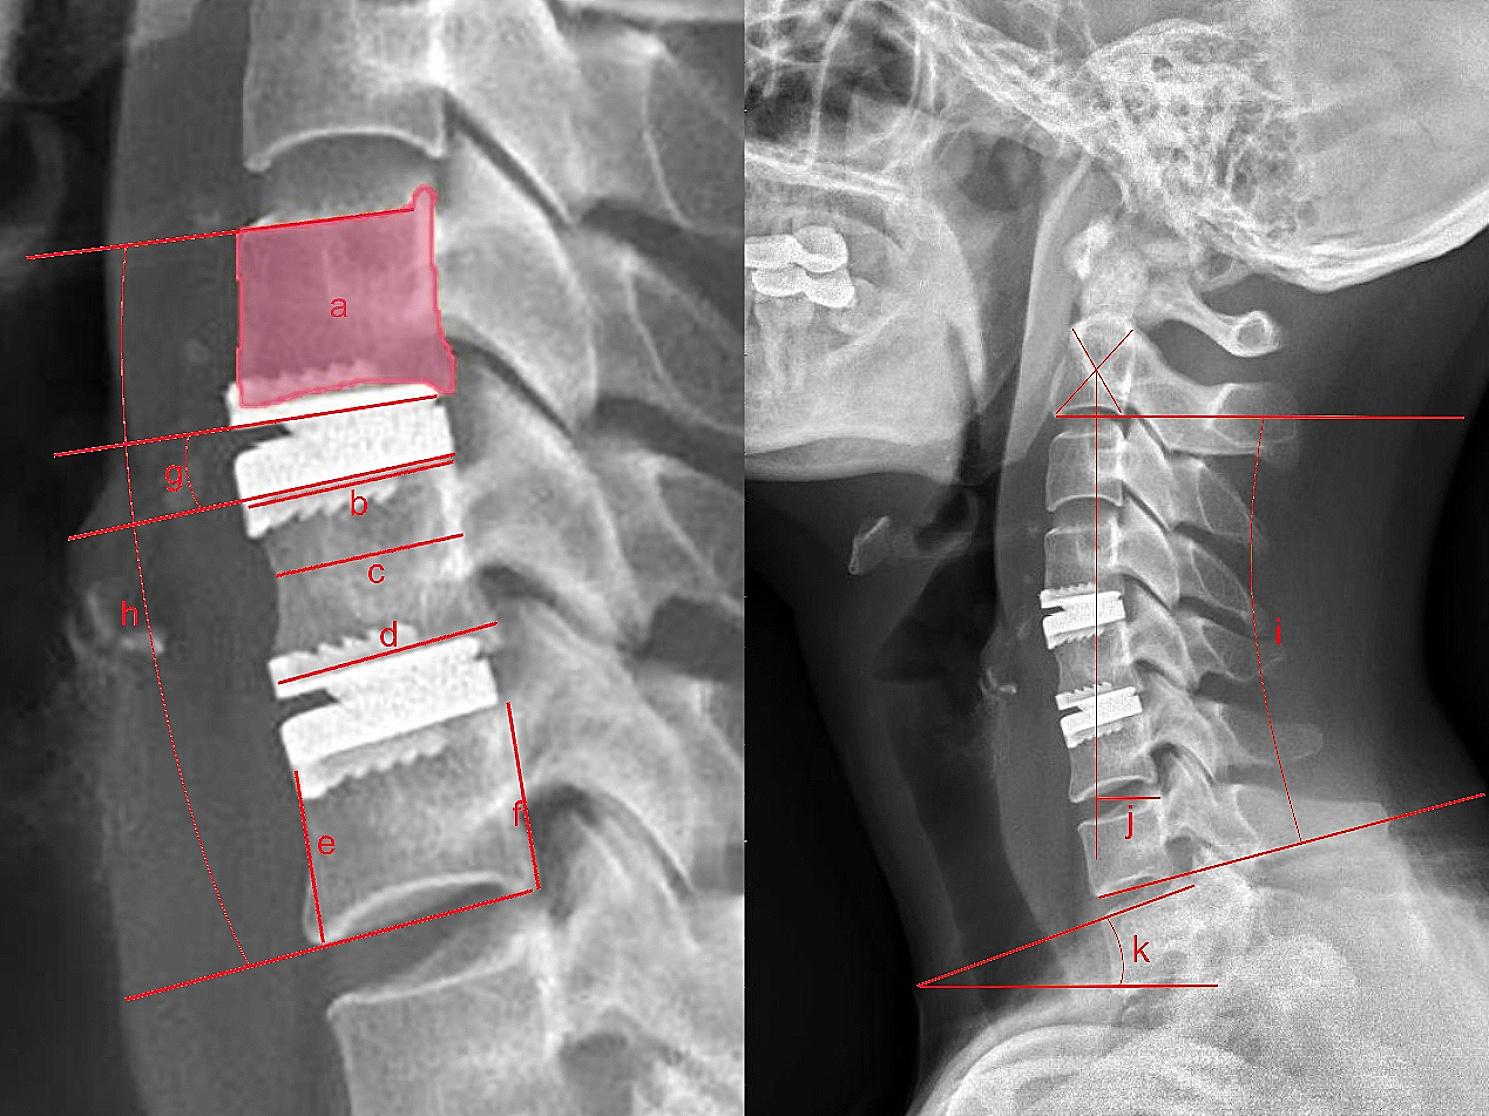 More anterior bone loss in middle vertebra after contiguous two-segment cervical disc arthroplasty